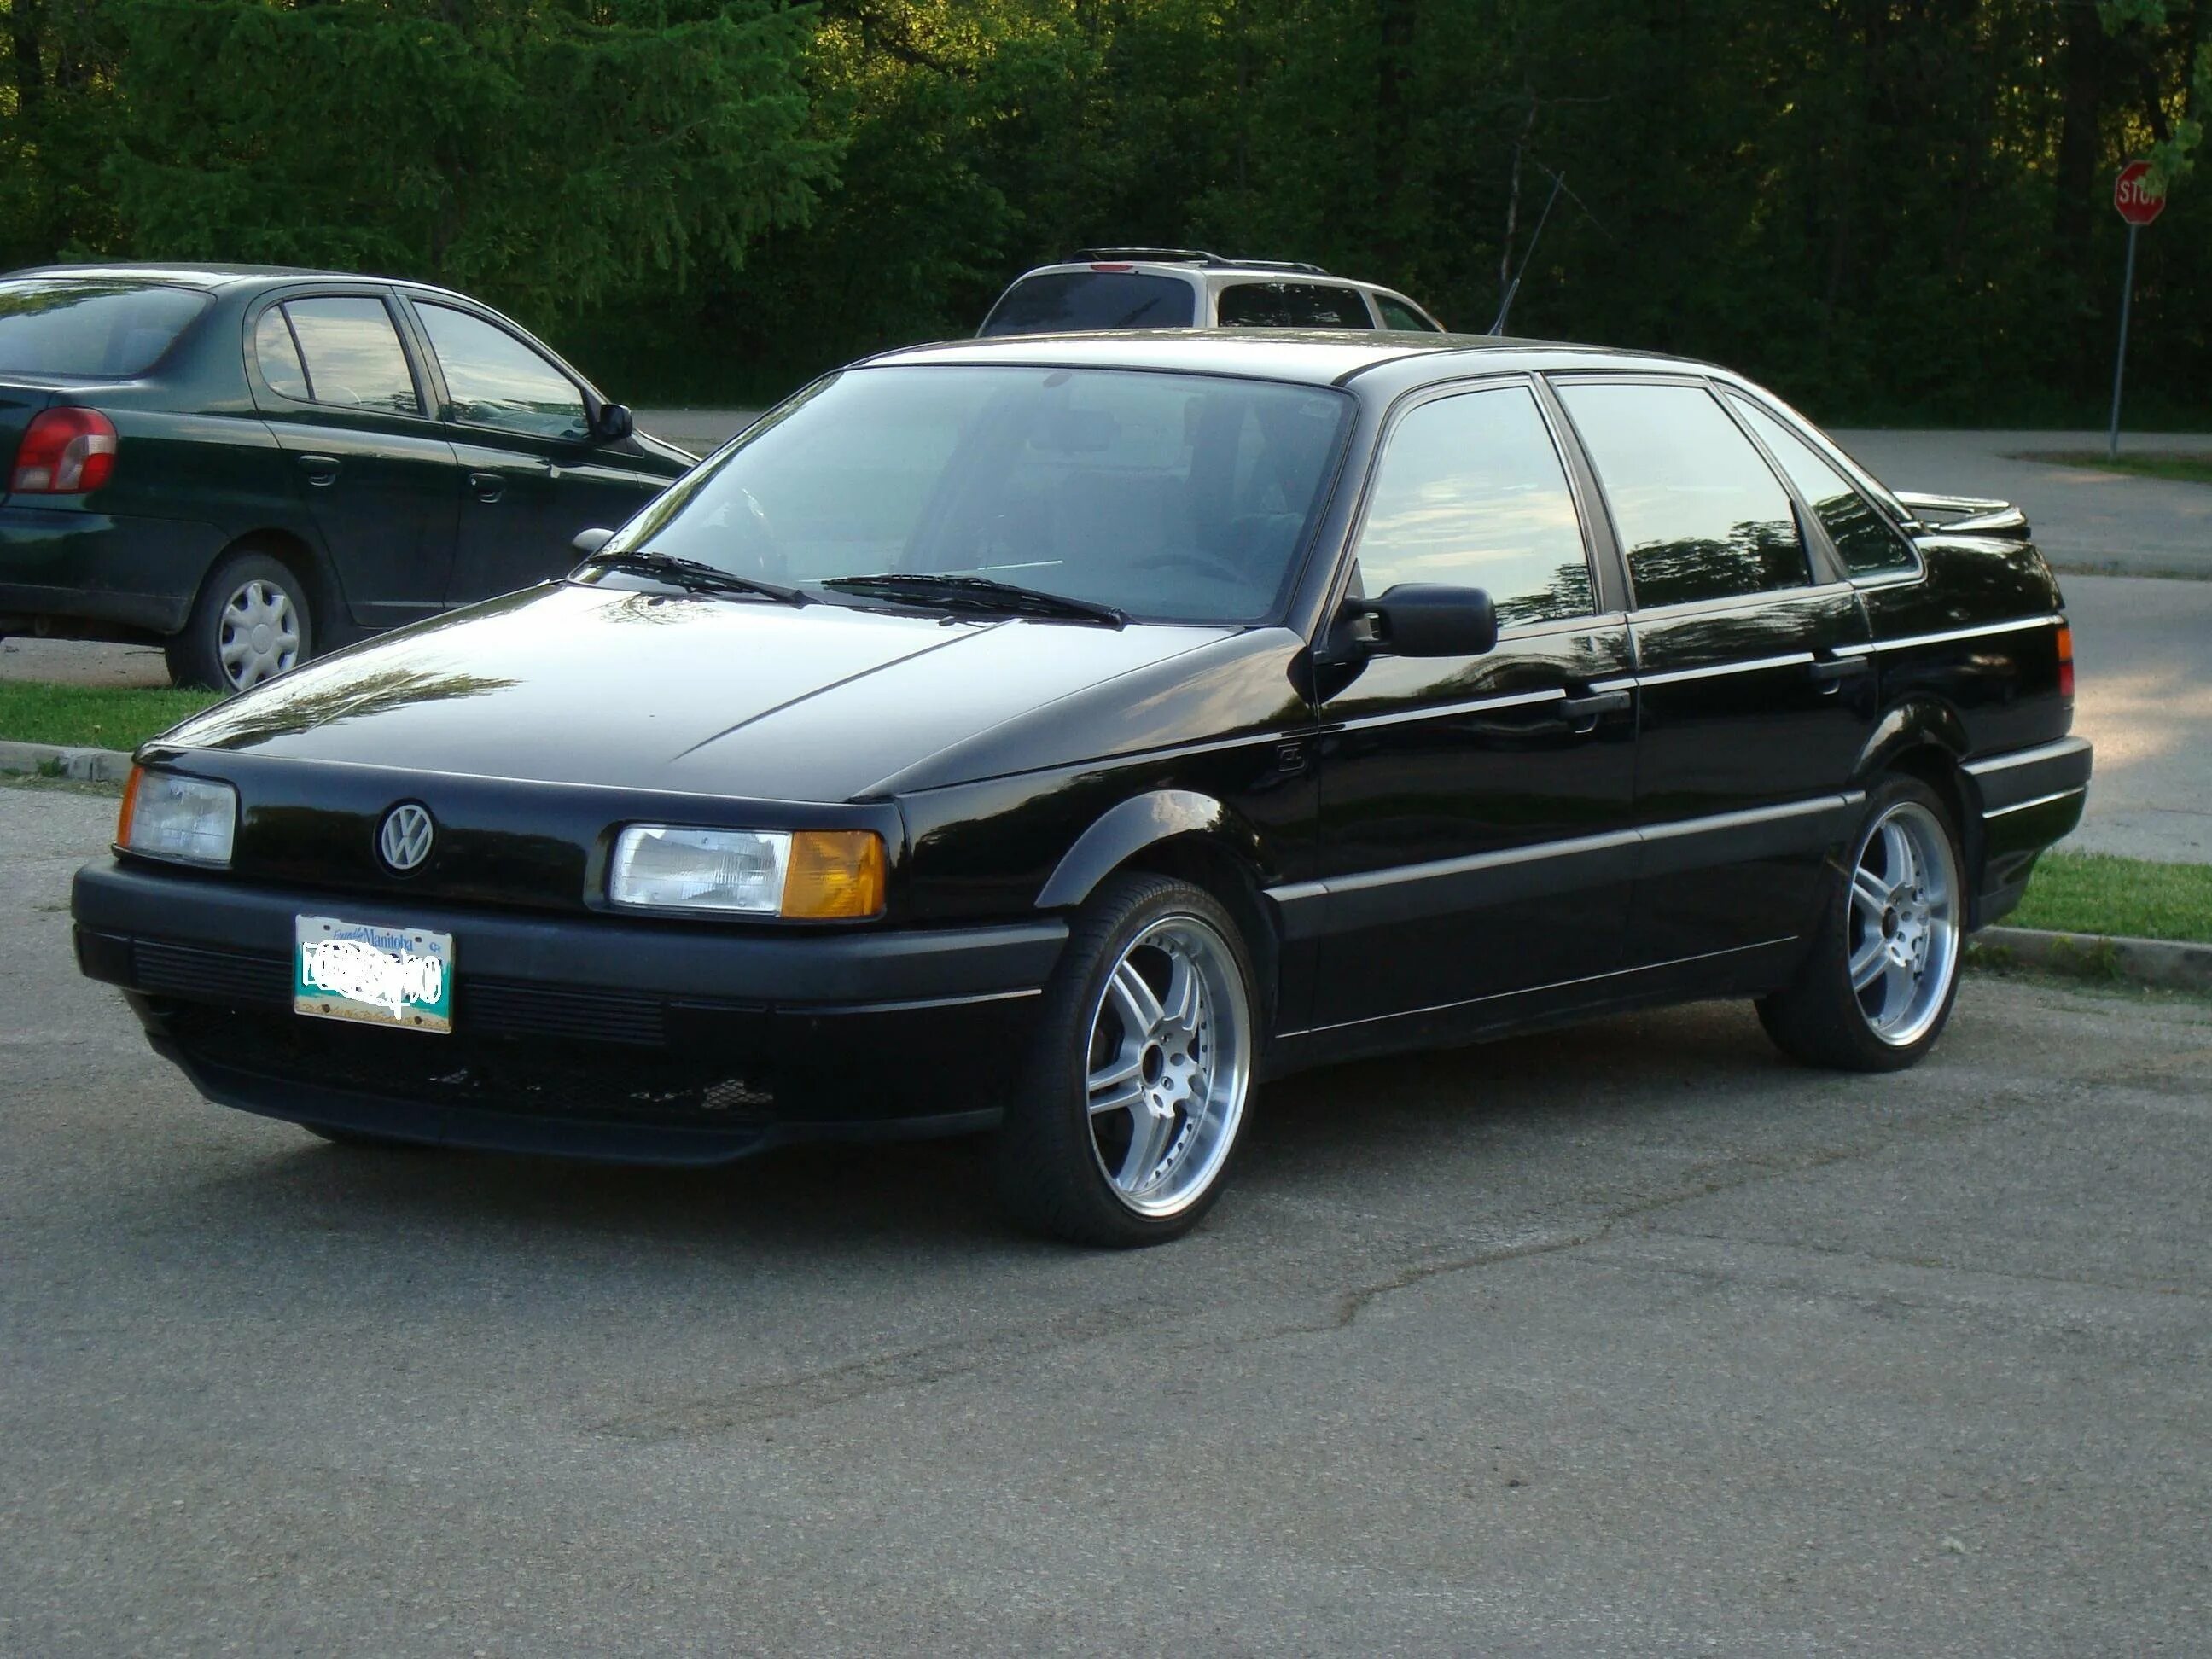 VW Passat b3 седан. Volkswagen Passat 1992 седан. Фольксваген Пассат б3. Volkswagen b3 седан. Б 4 6